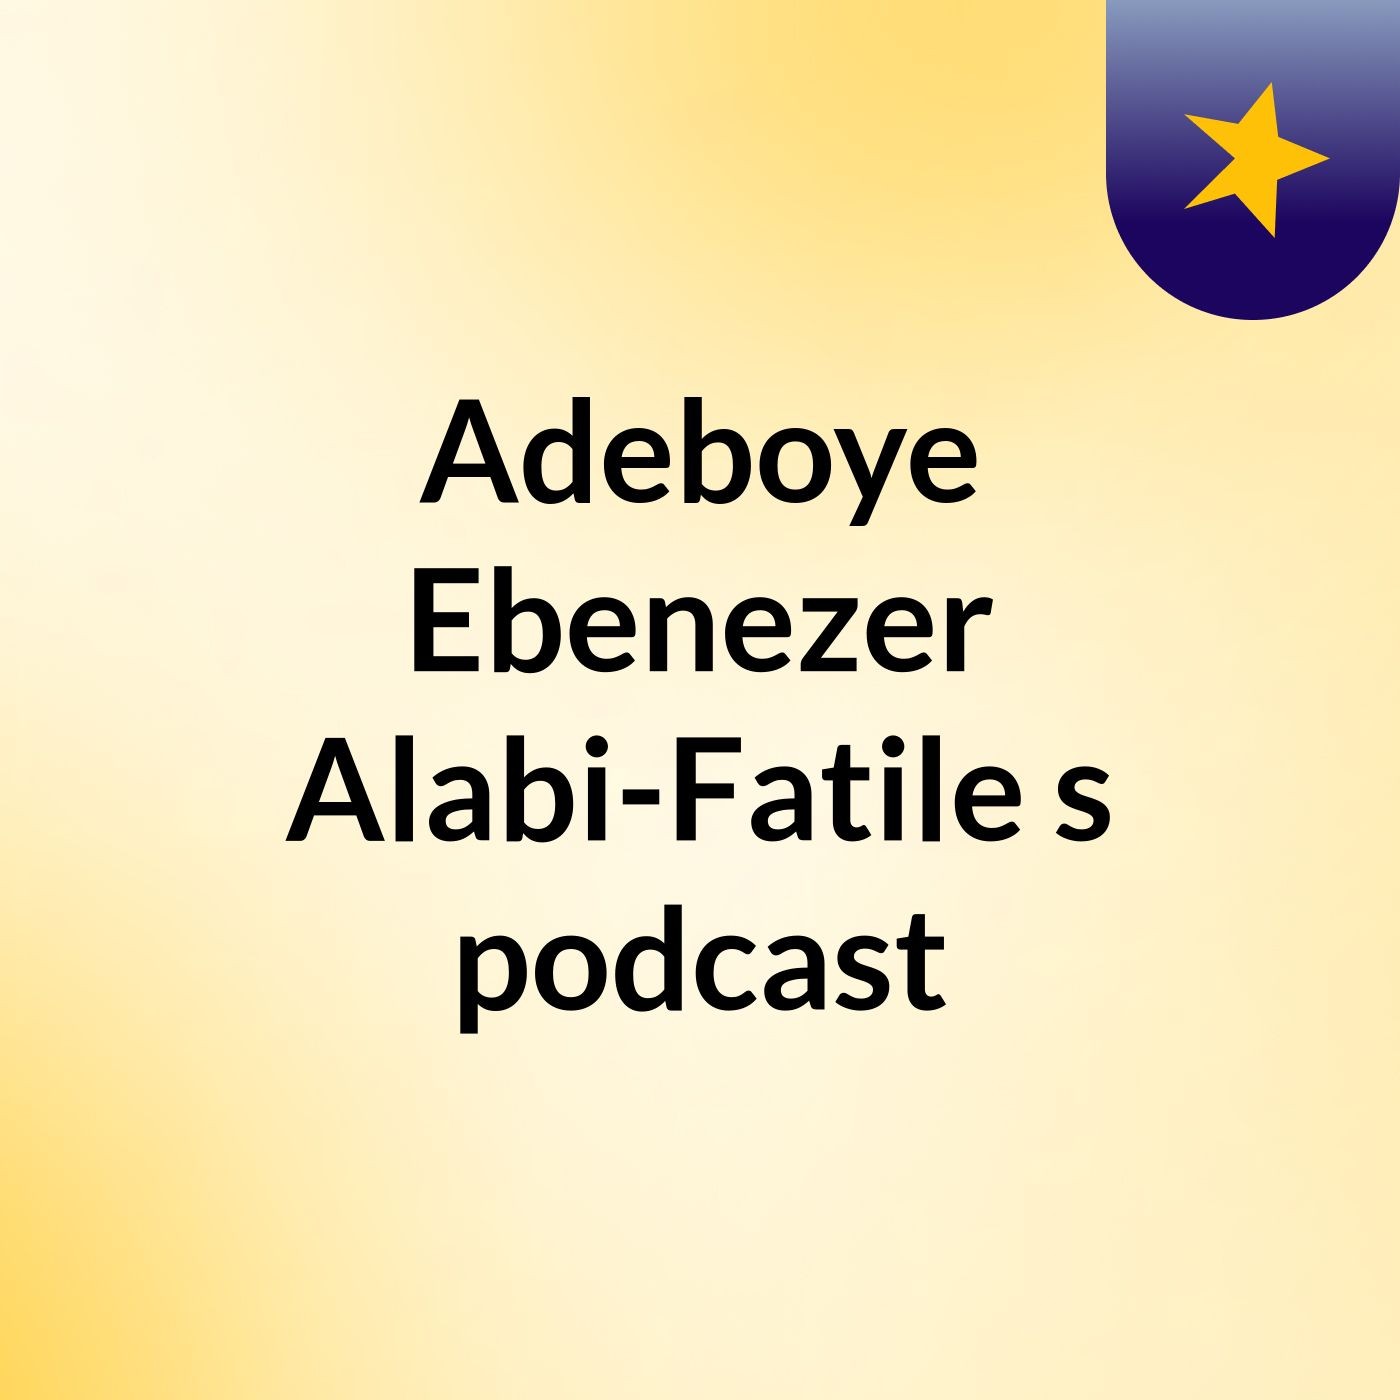 Adeboye Ebenezer Alabi-Fatile's podcast